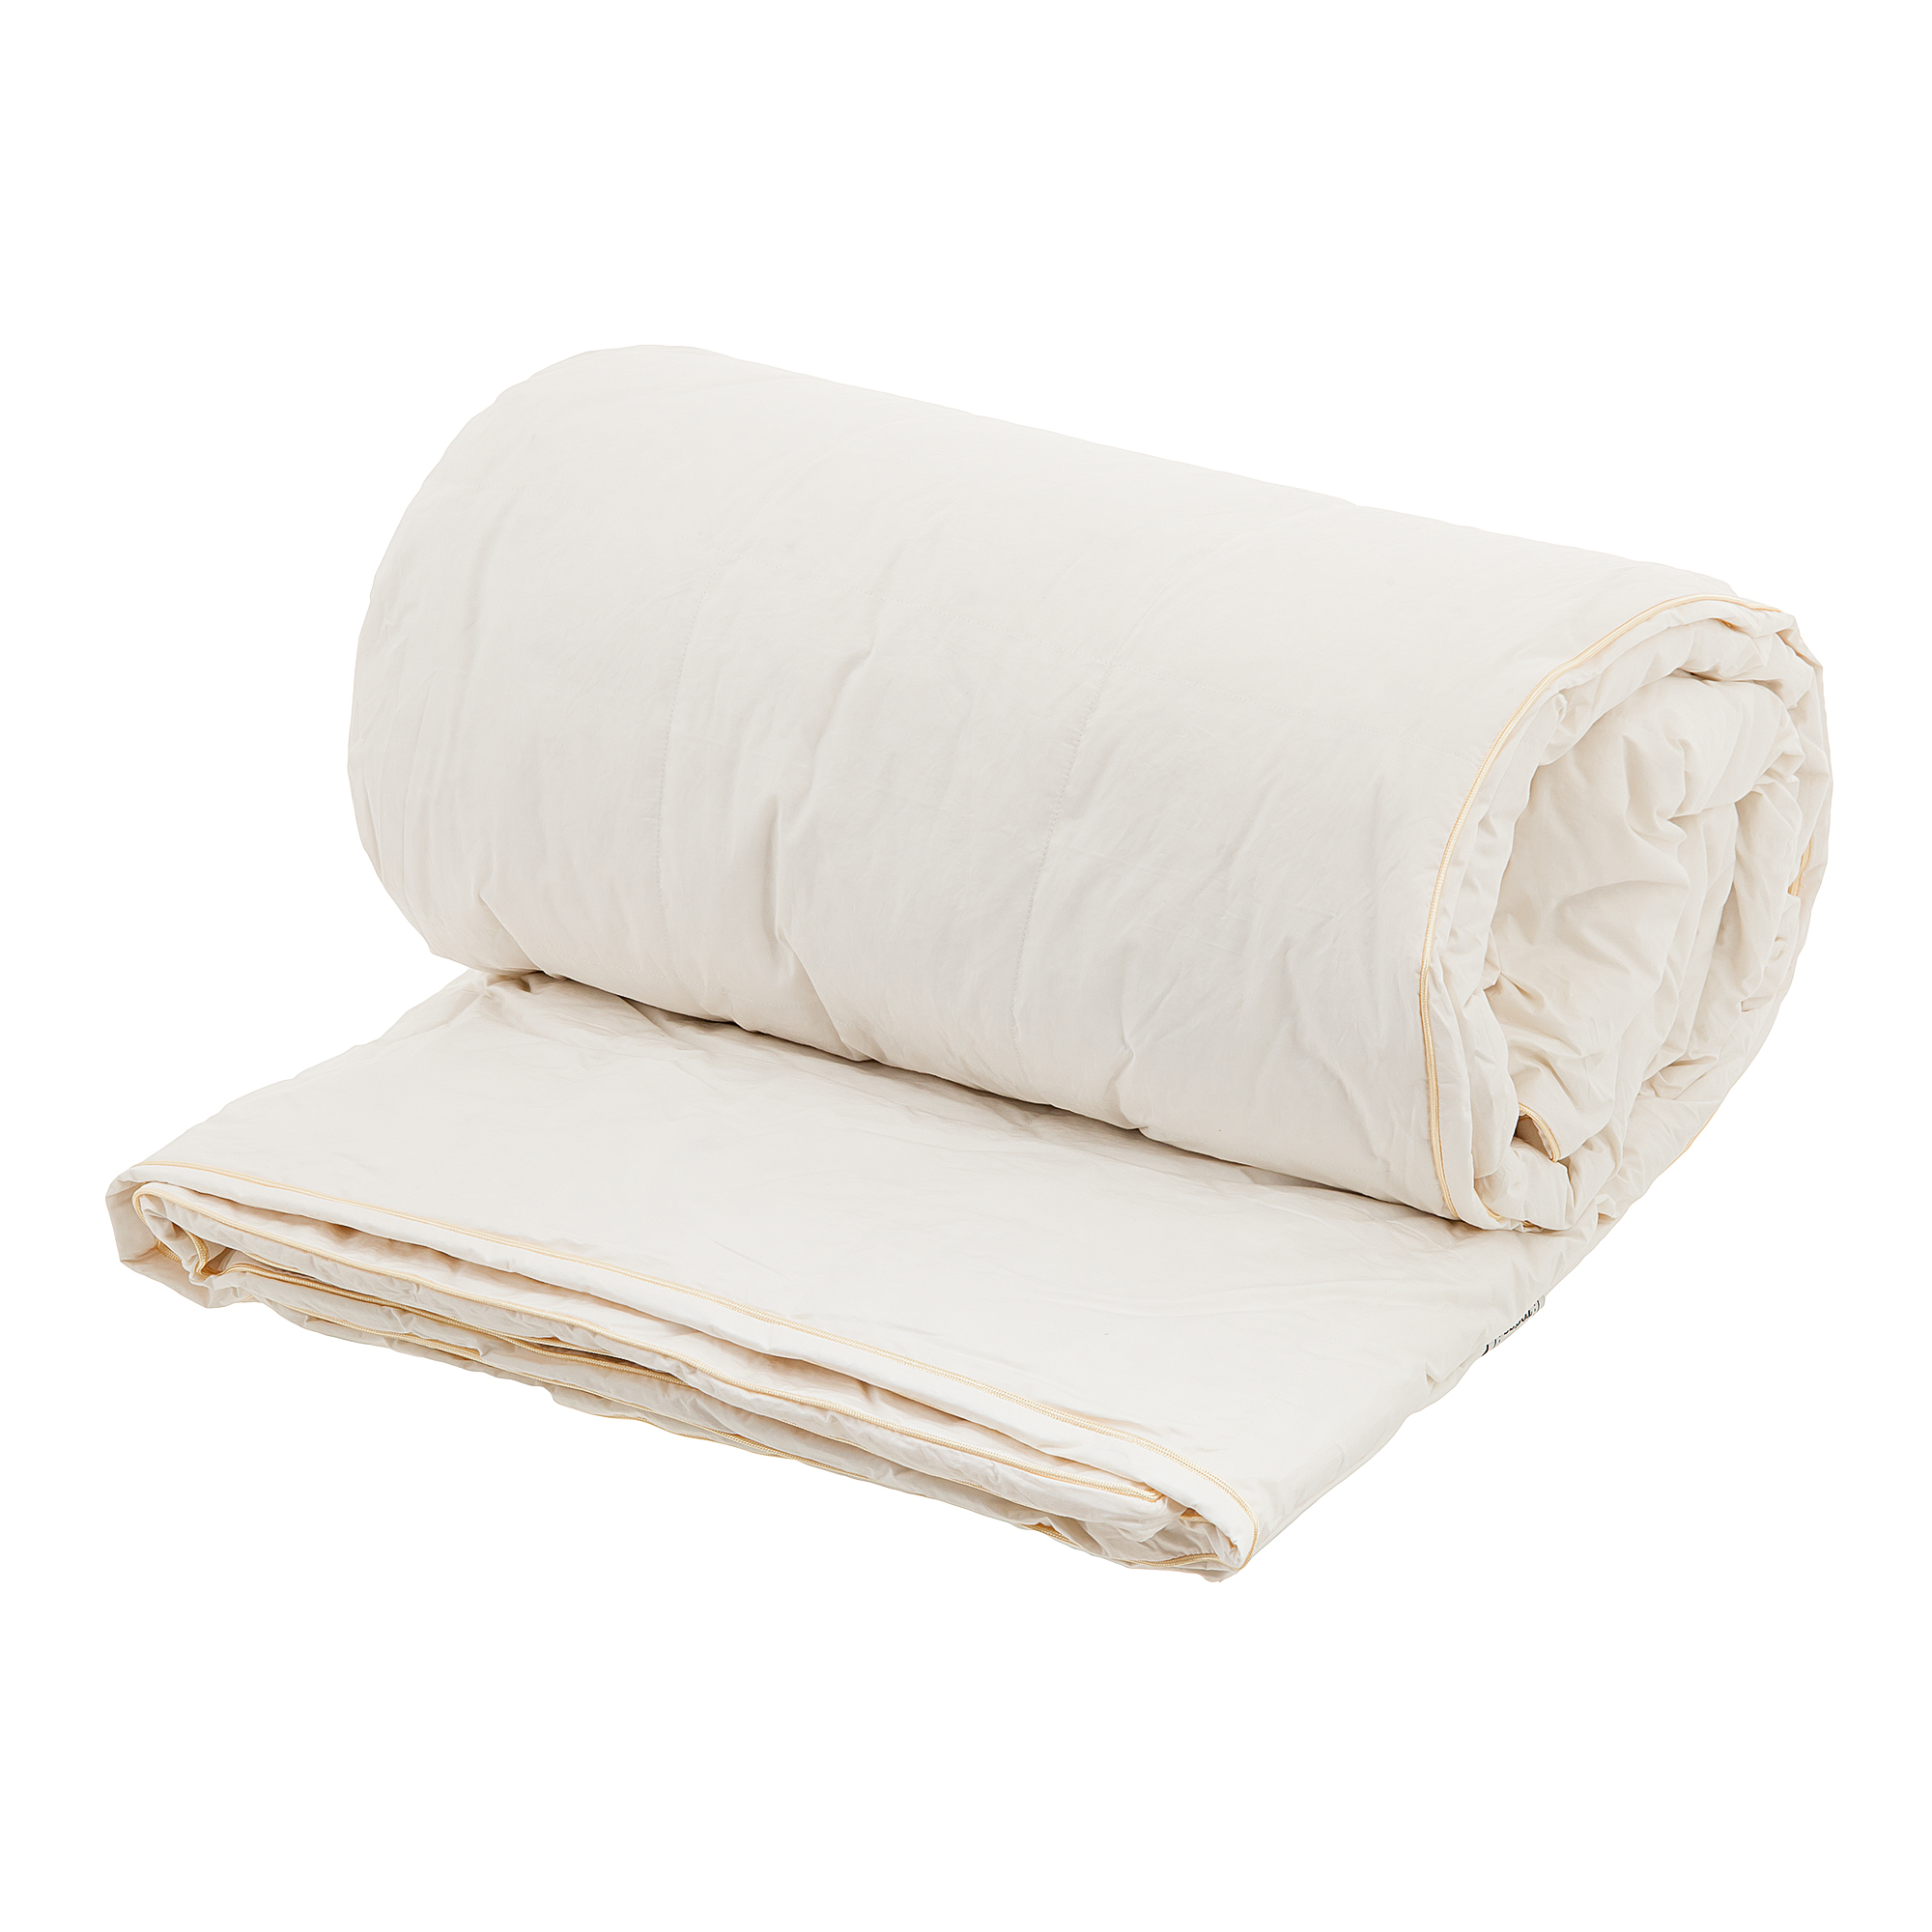 одеяло togas саммин белое 140х200 см Одеяло Togas Артемис 140х200 см